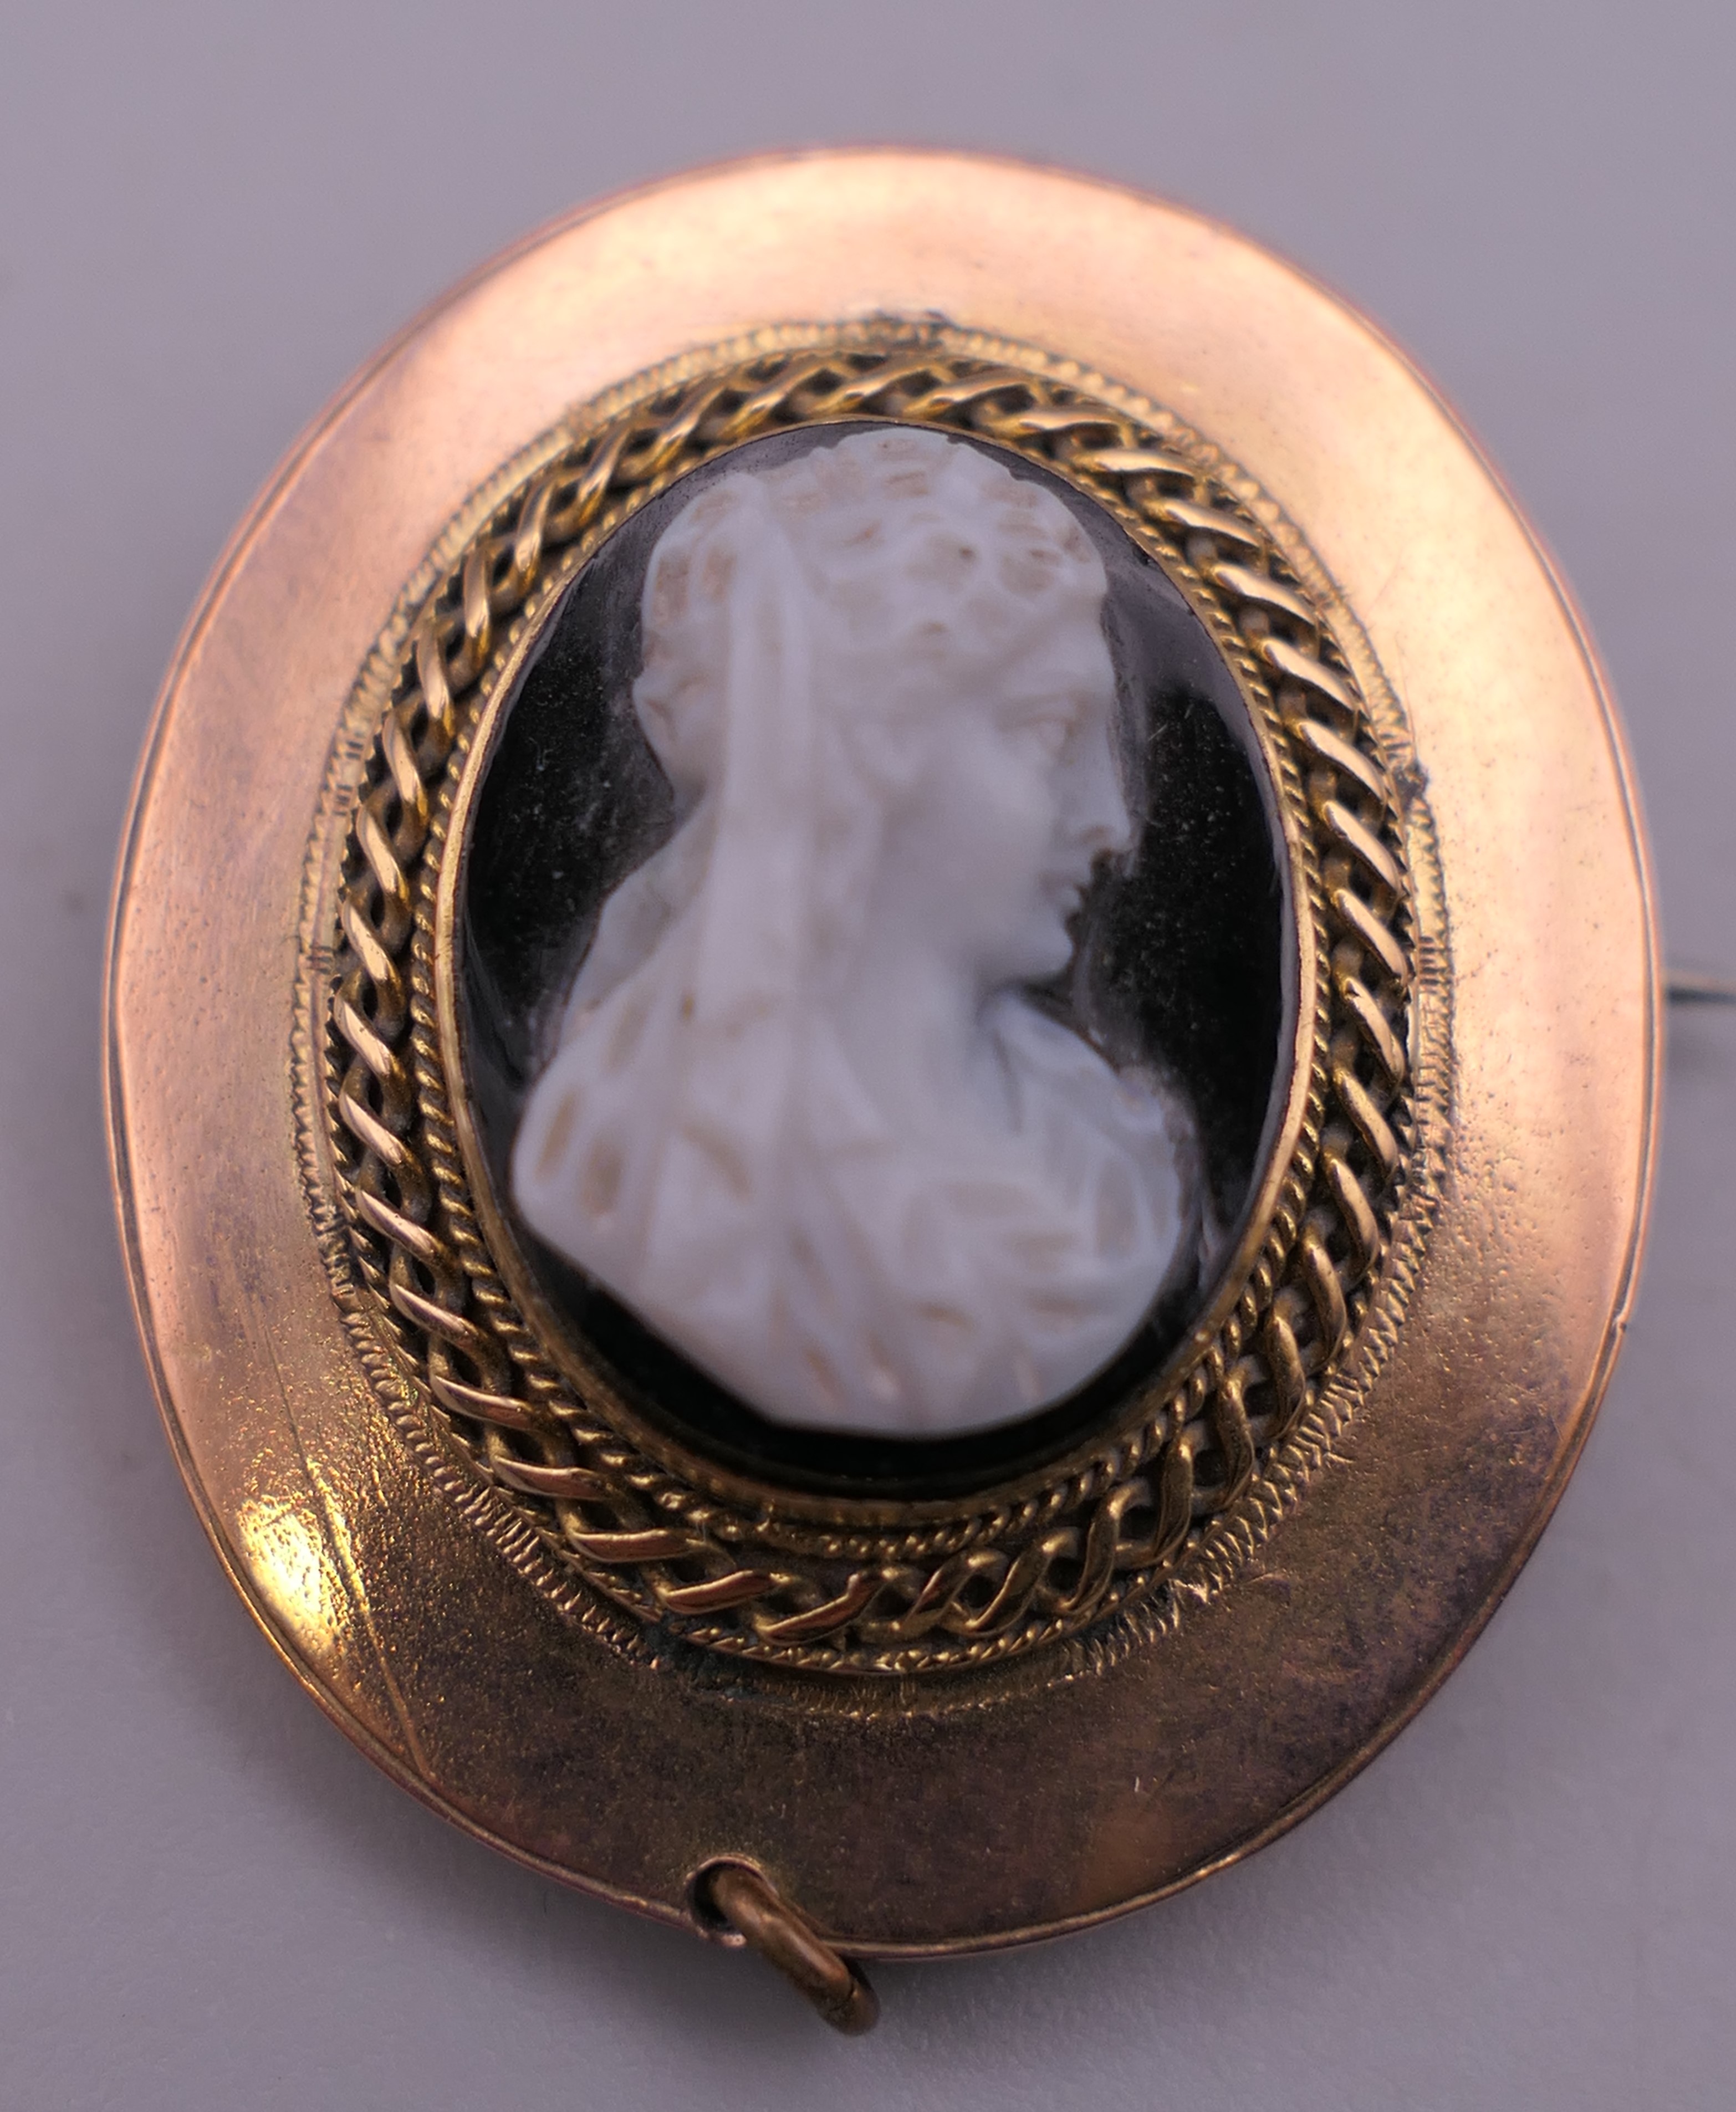 A 19th century hardstone cameo brooch. 3 cm high.